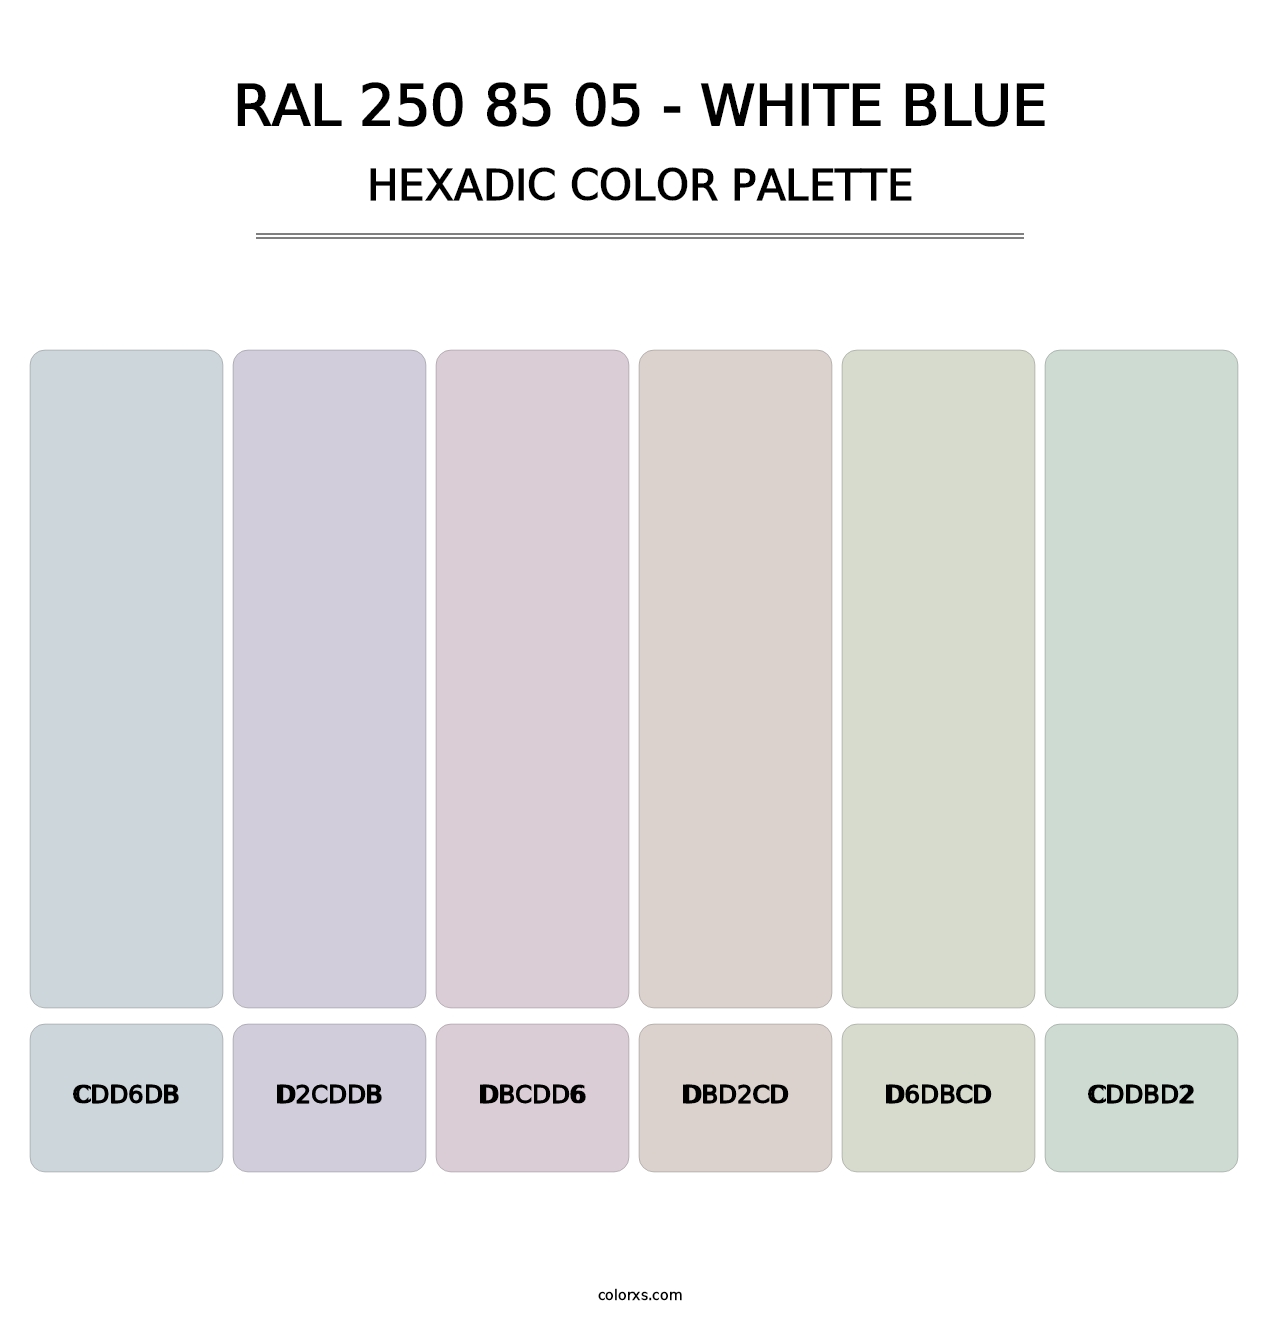 RAL 250 85 05 - White Blue - Hexadic Color Palette